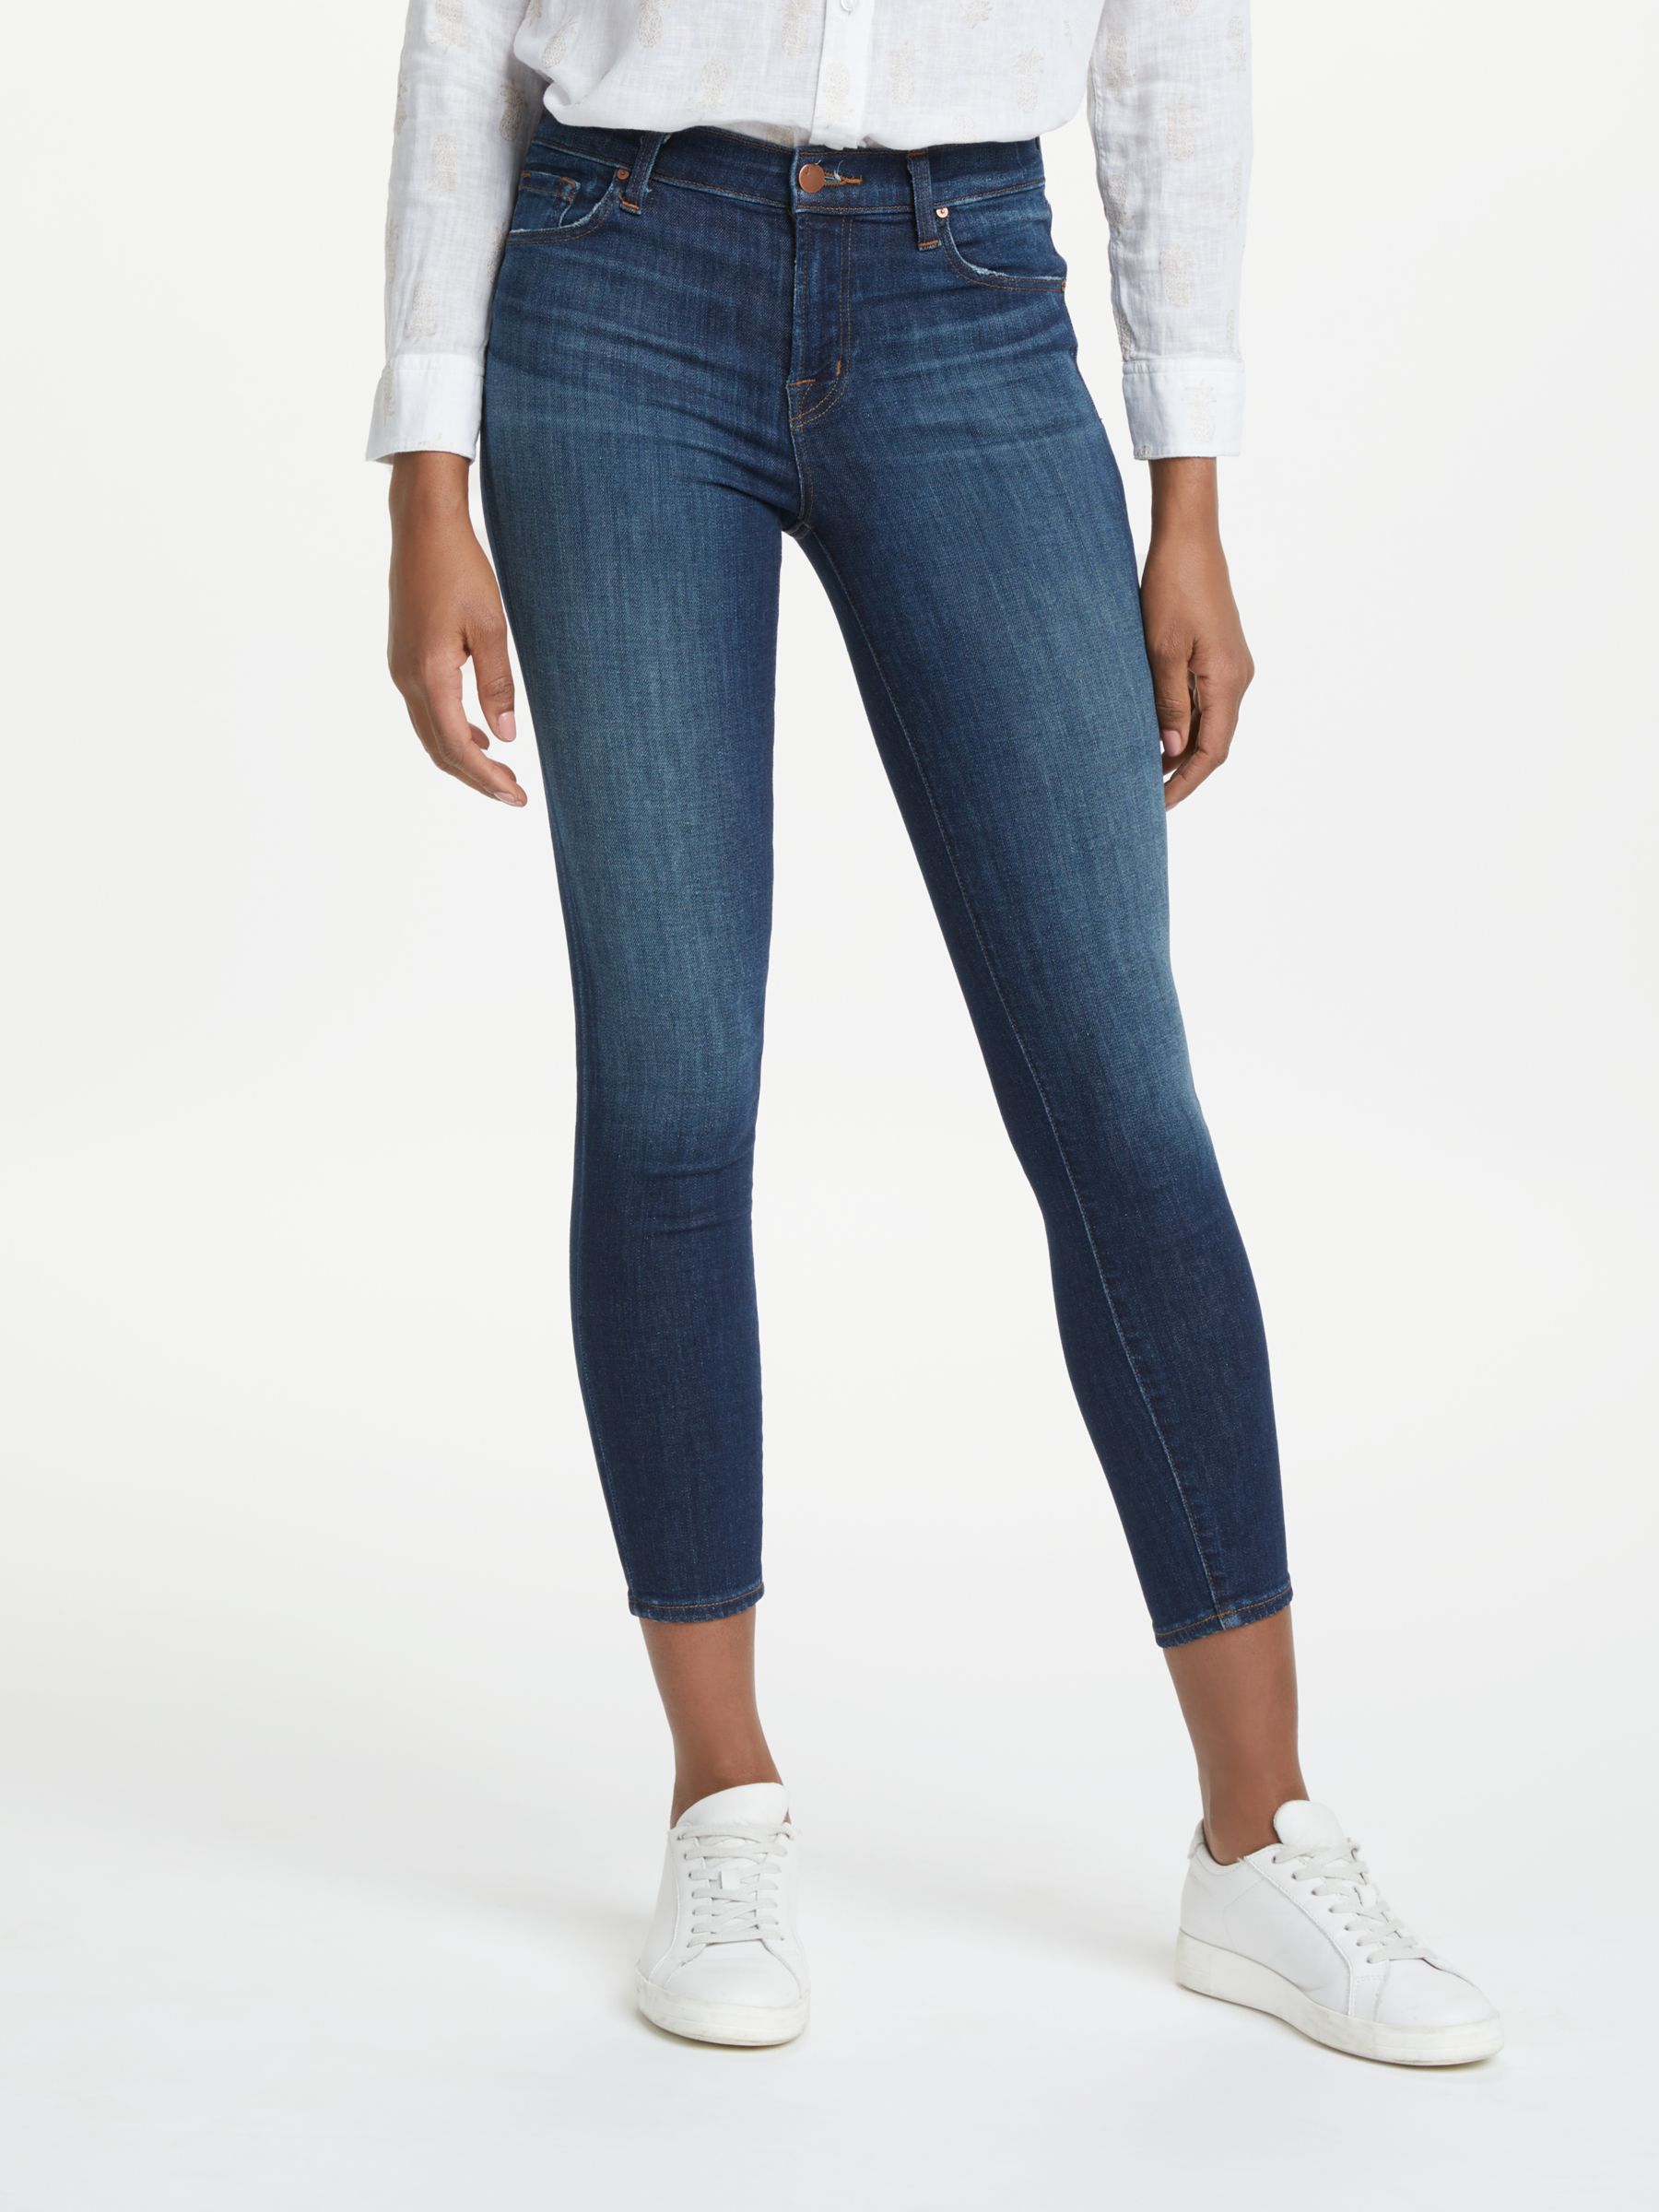 j brand 835 cropped skinny jeans